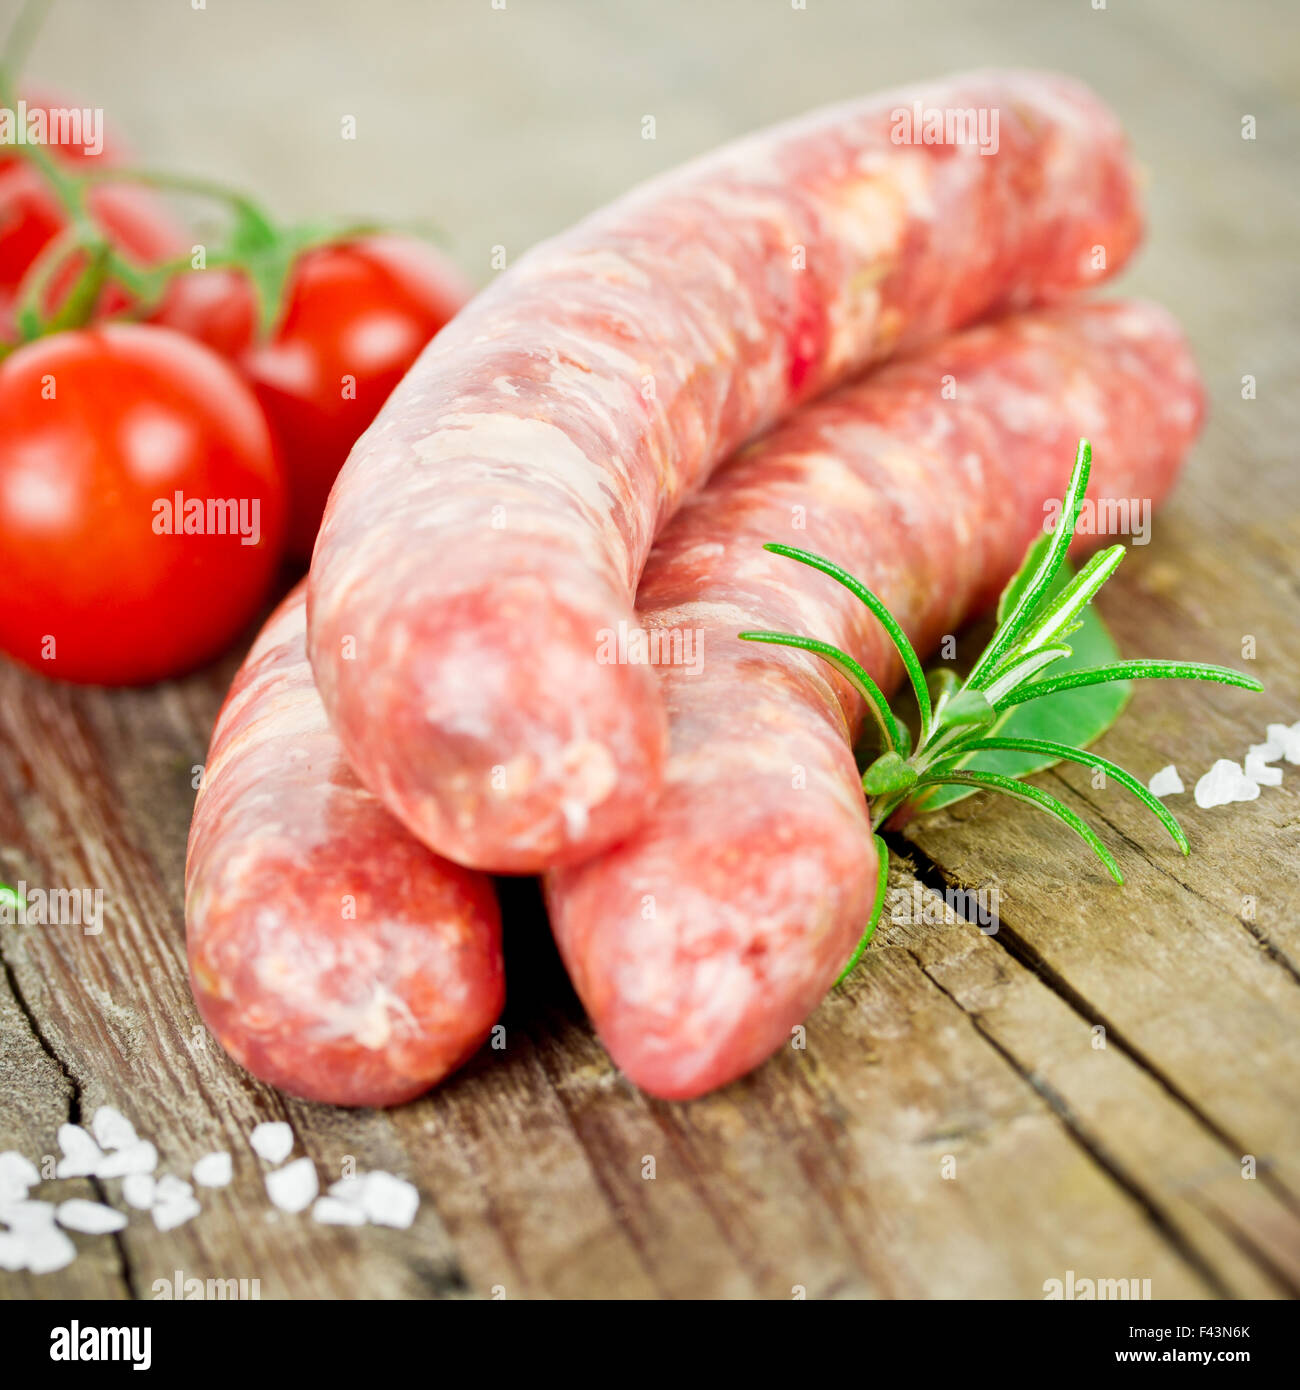 sausages Stock Photo